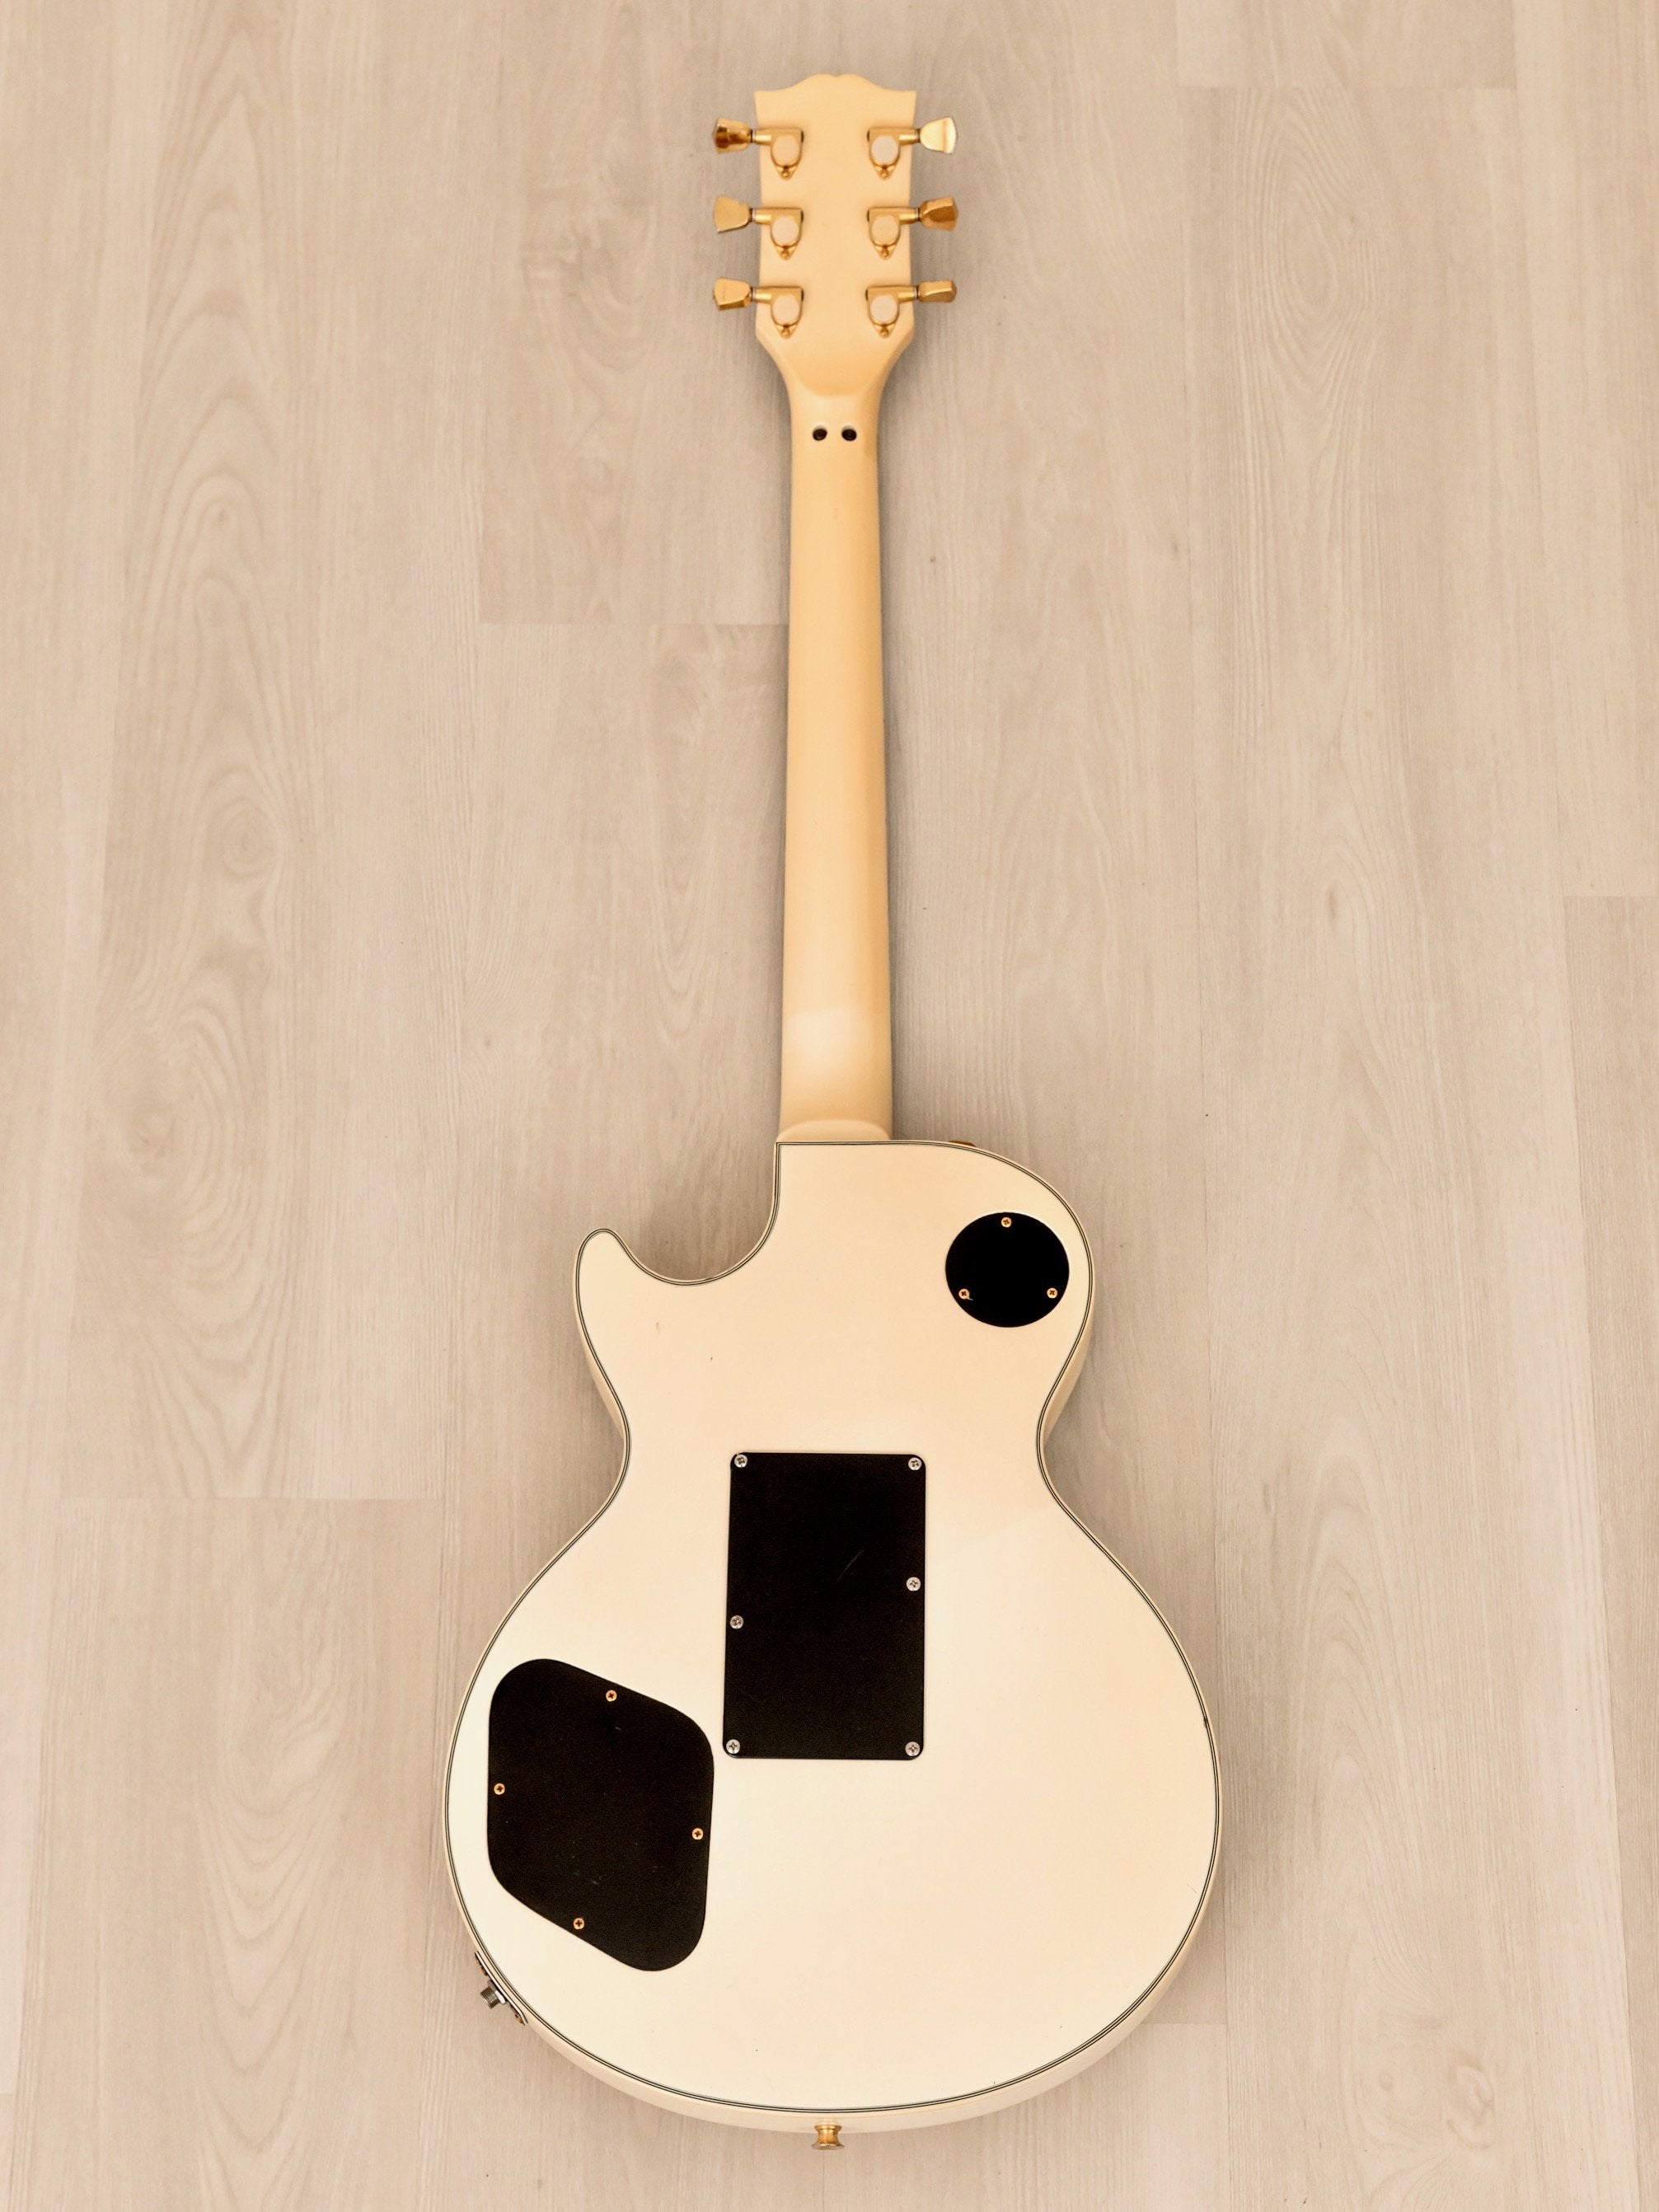 1989 Burny LC-100YS Yasu Signature Vintage Guitar Snow White w/ Tremolo & Case, Japan Fernandes